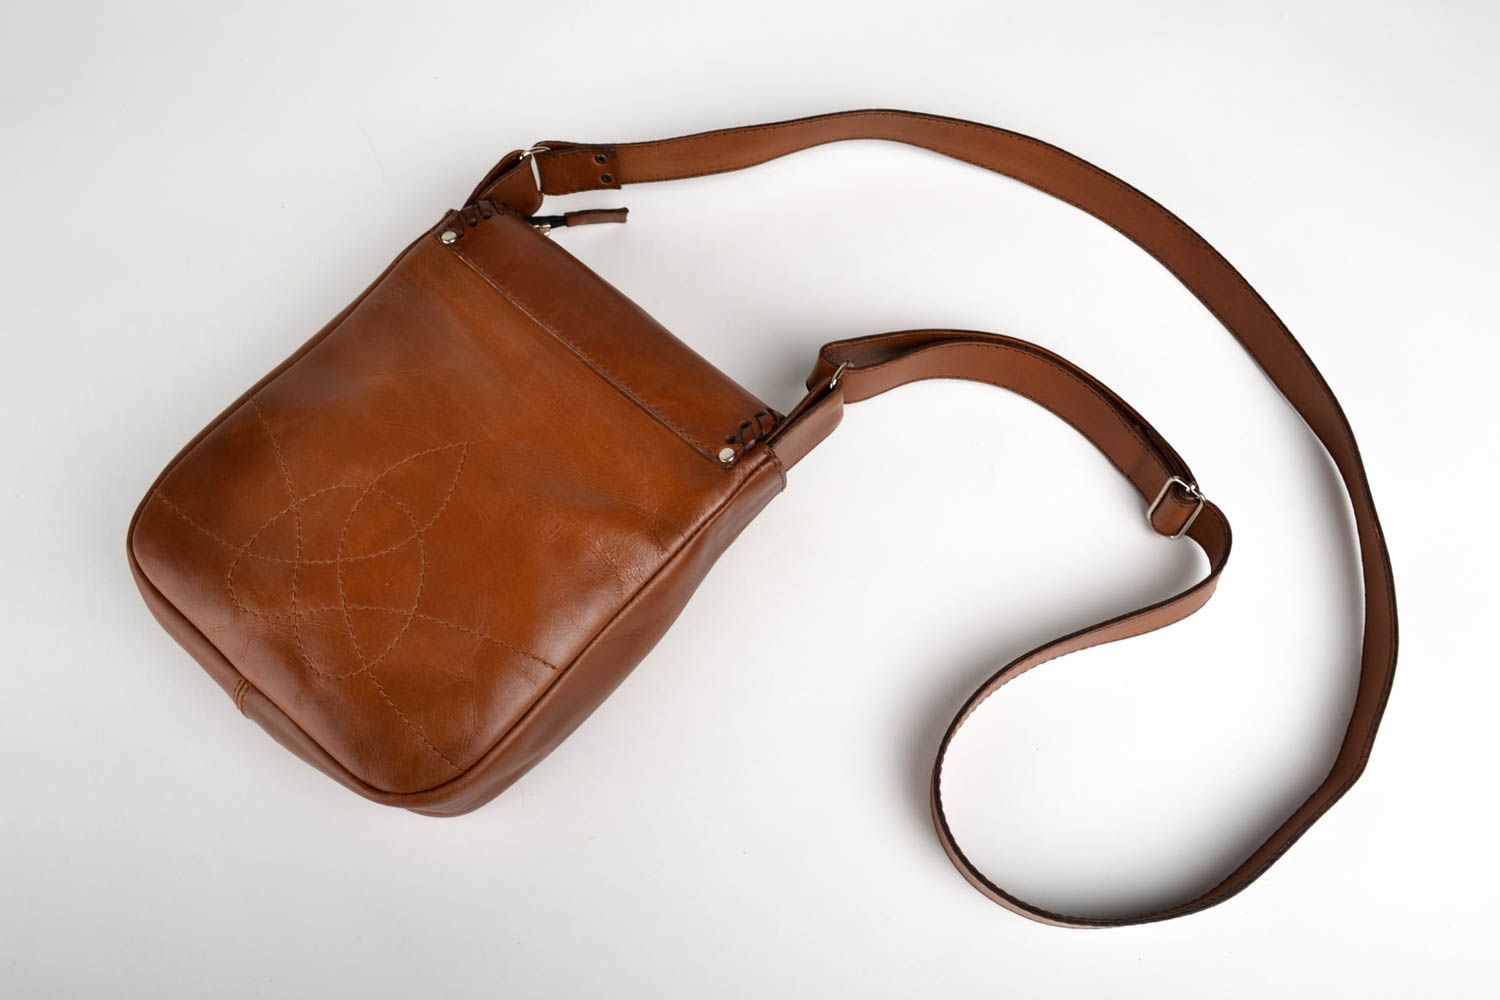 Leather purse stylish accessories fashion shoulder bag elegant purse for girls photo 2